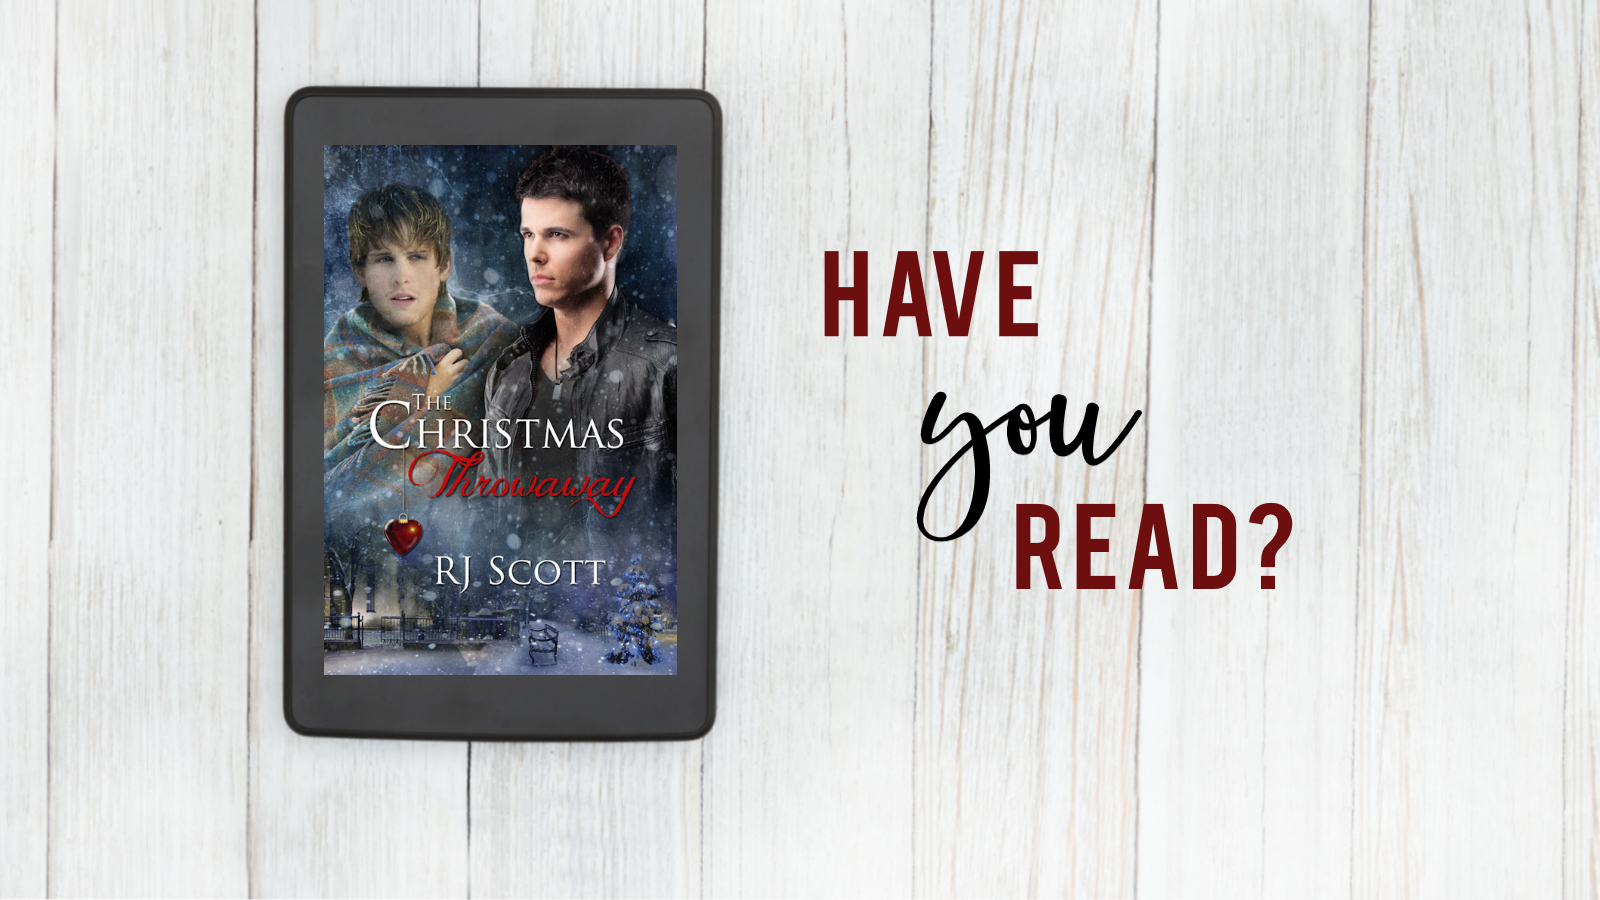 Have you read MM Christmas Romance RJ Scott